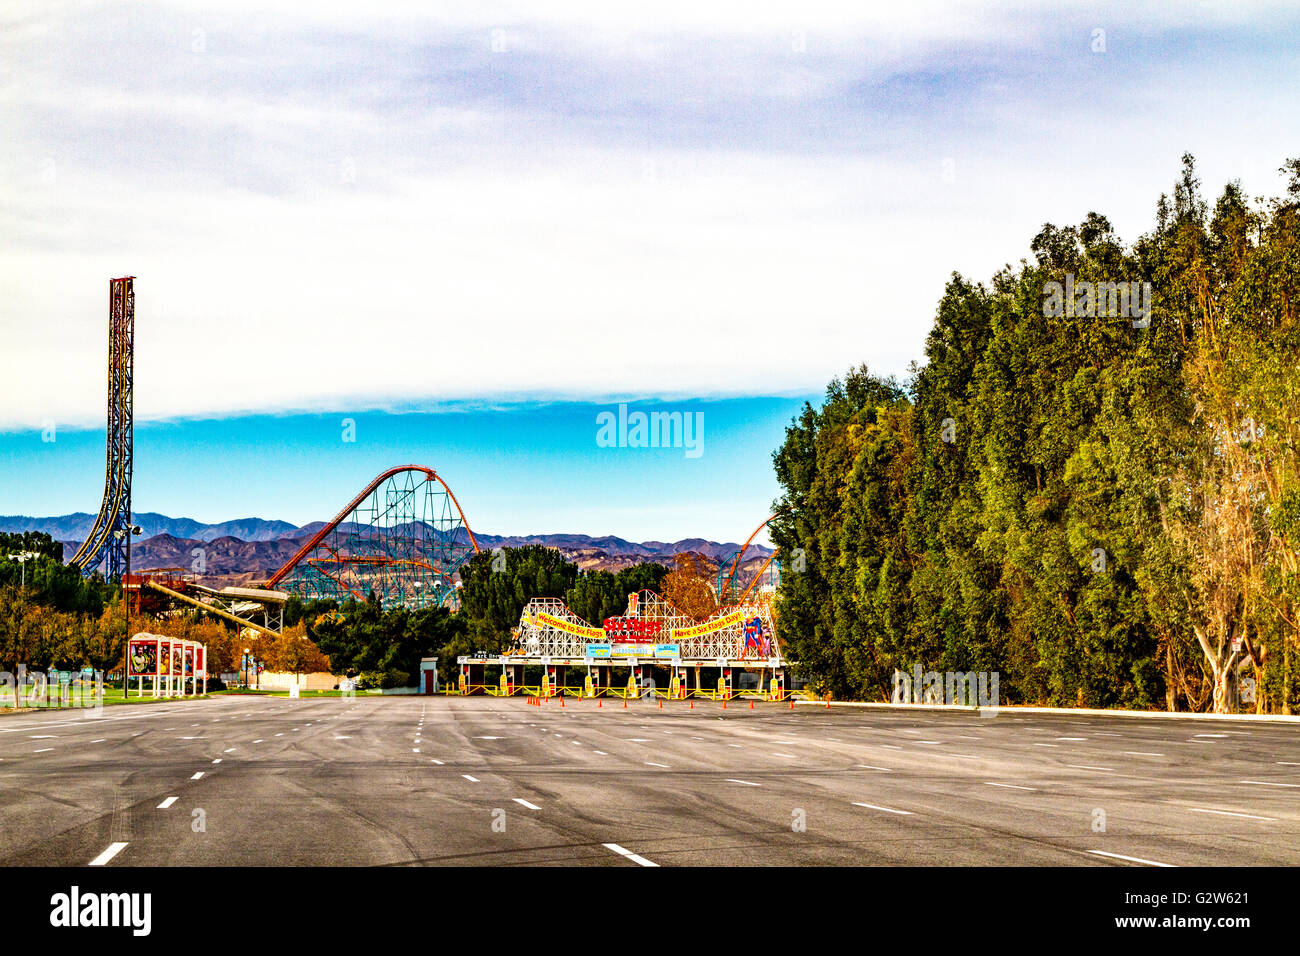 The entrance to Six Flags Magic Mountain in Santa Clarita California Stock Photo